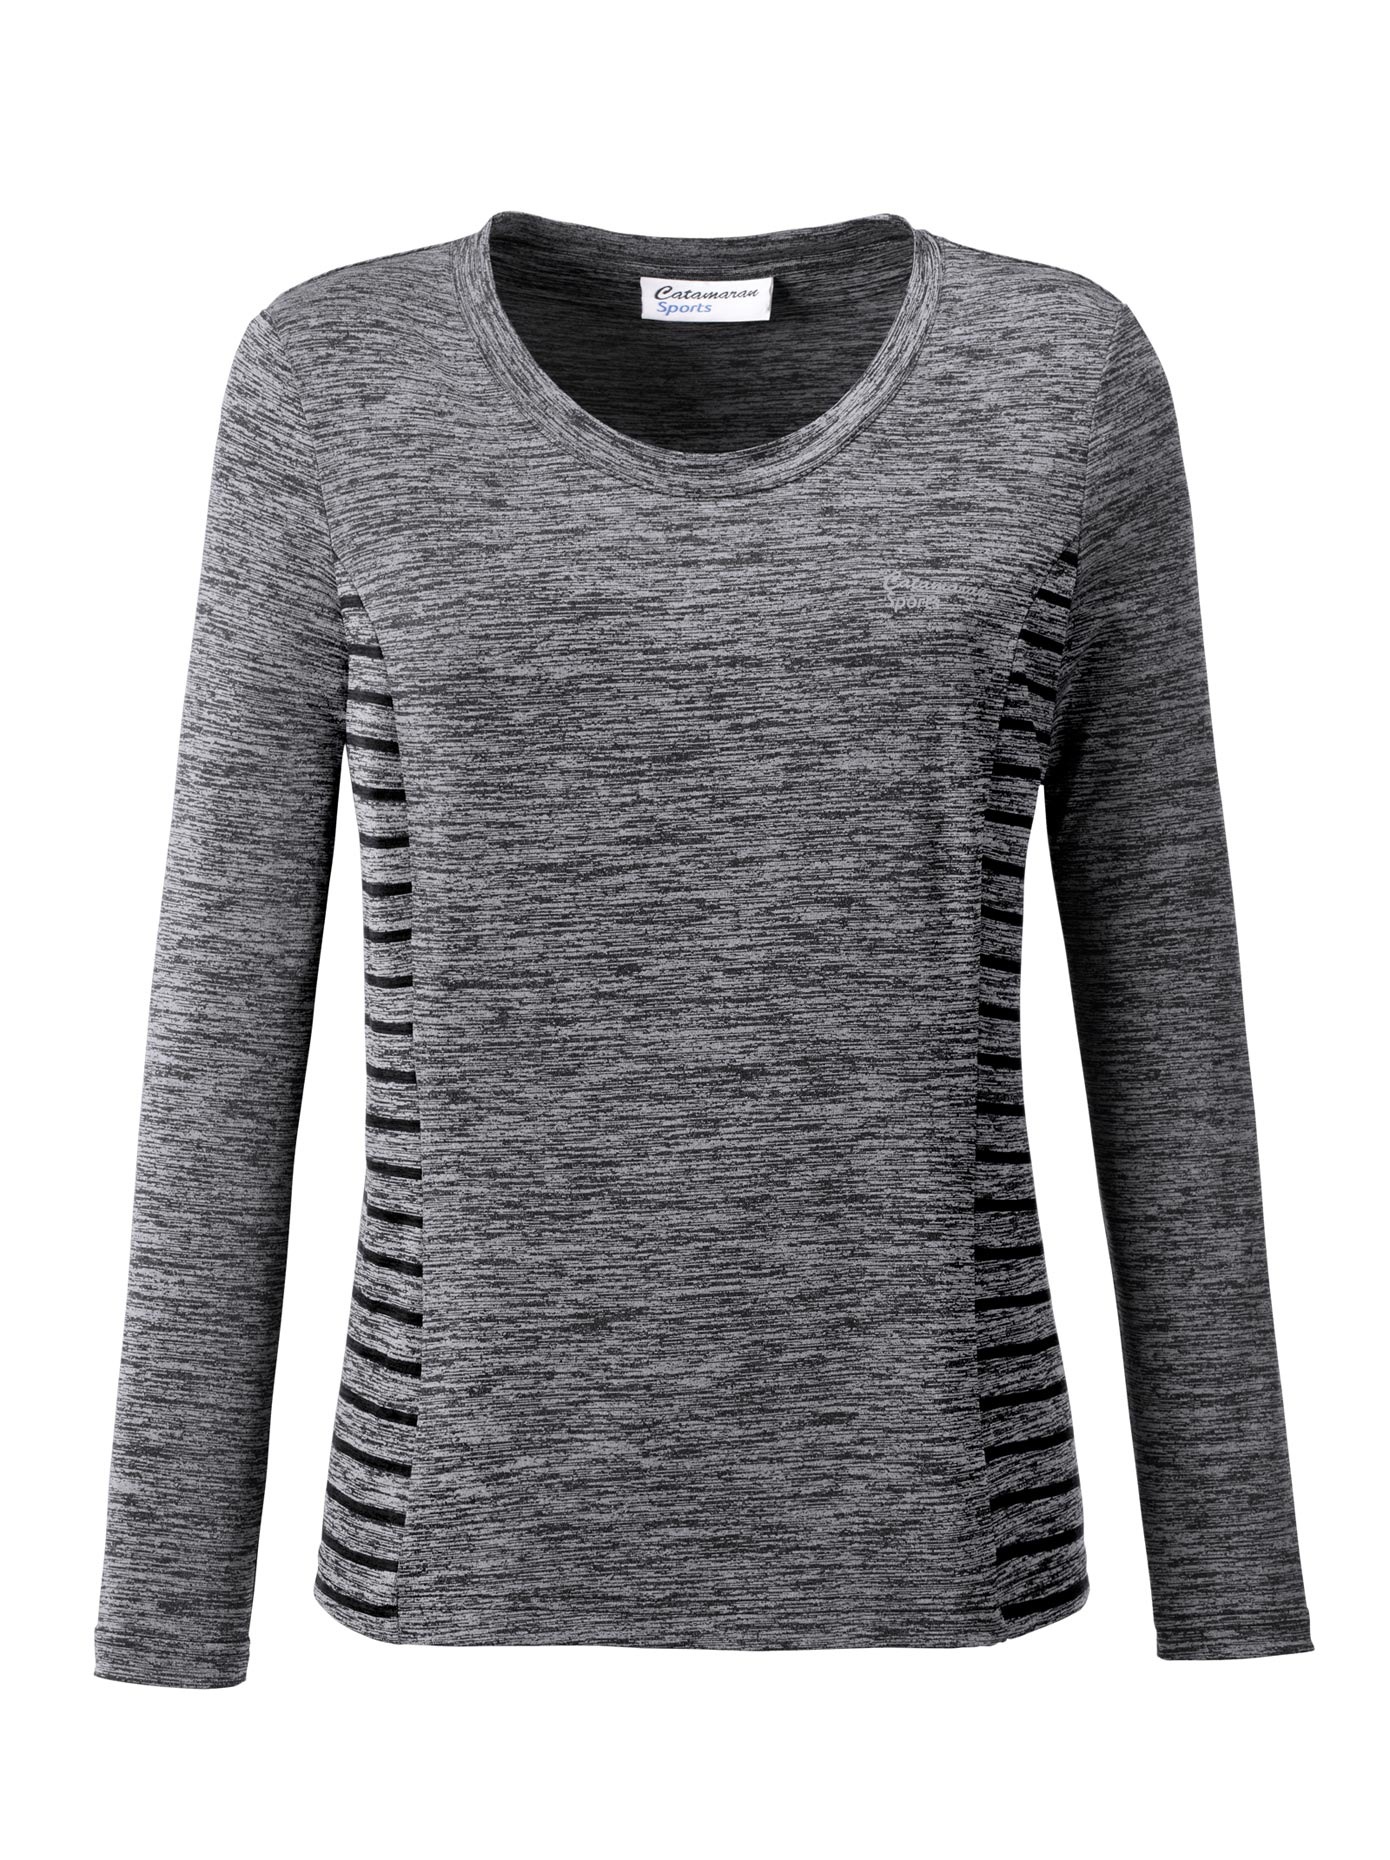 Sheego Langarmshirt »Große Größen« mit Knotendetail am Ärmelsaum | T-Shirts